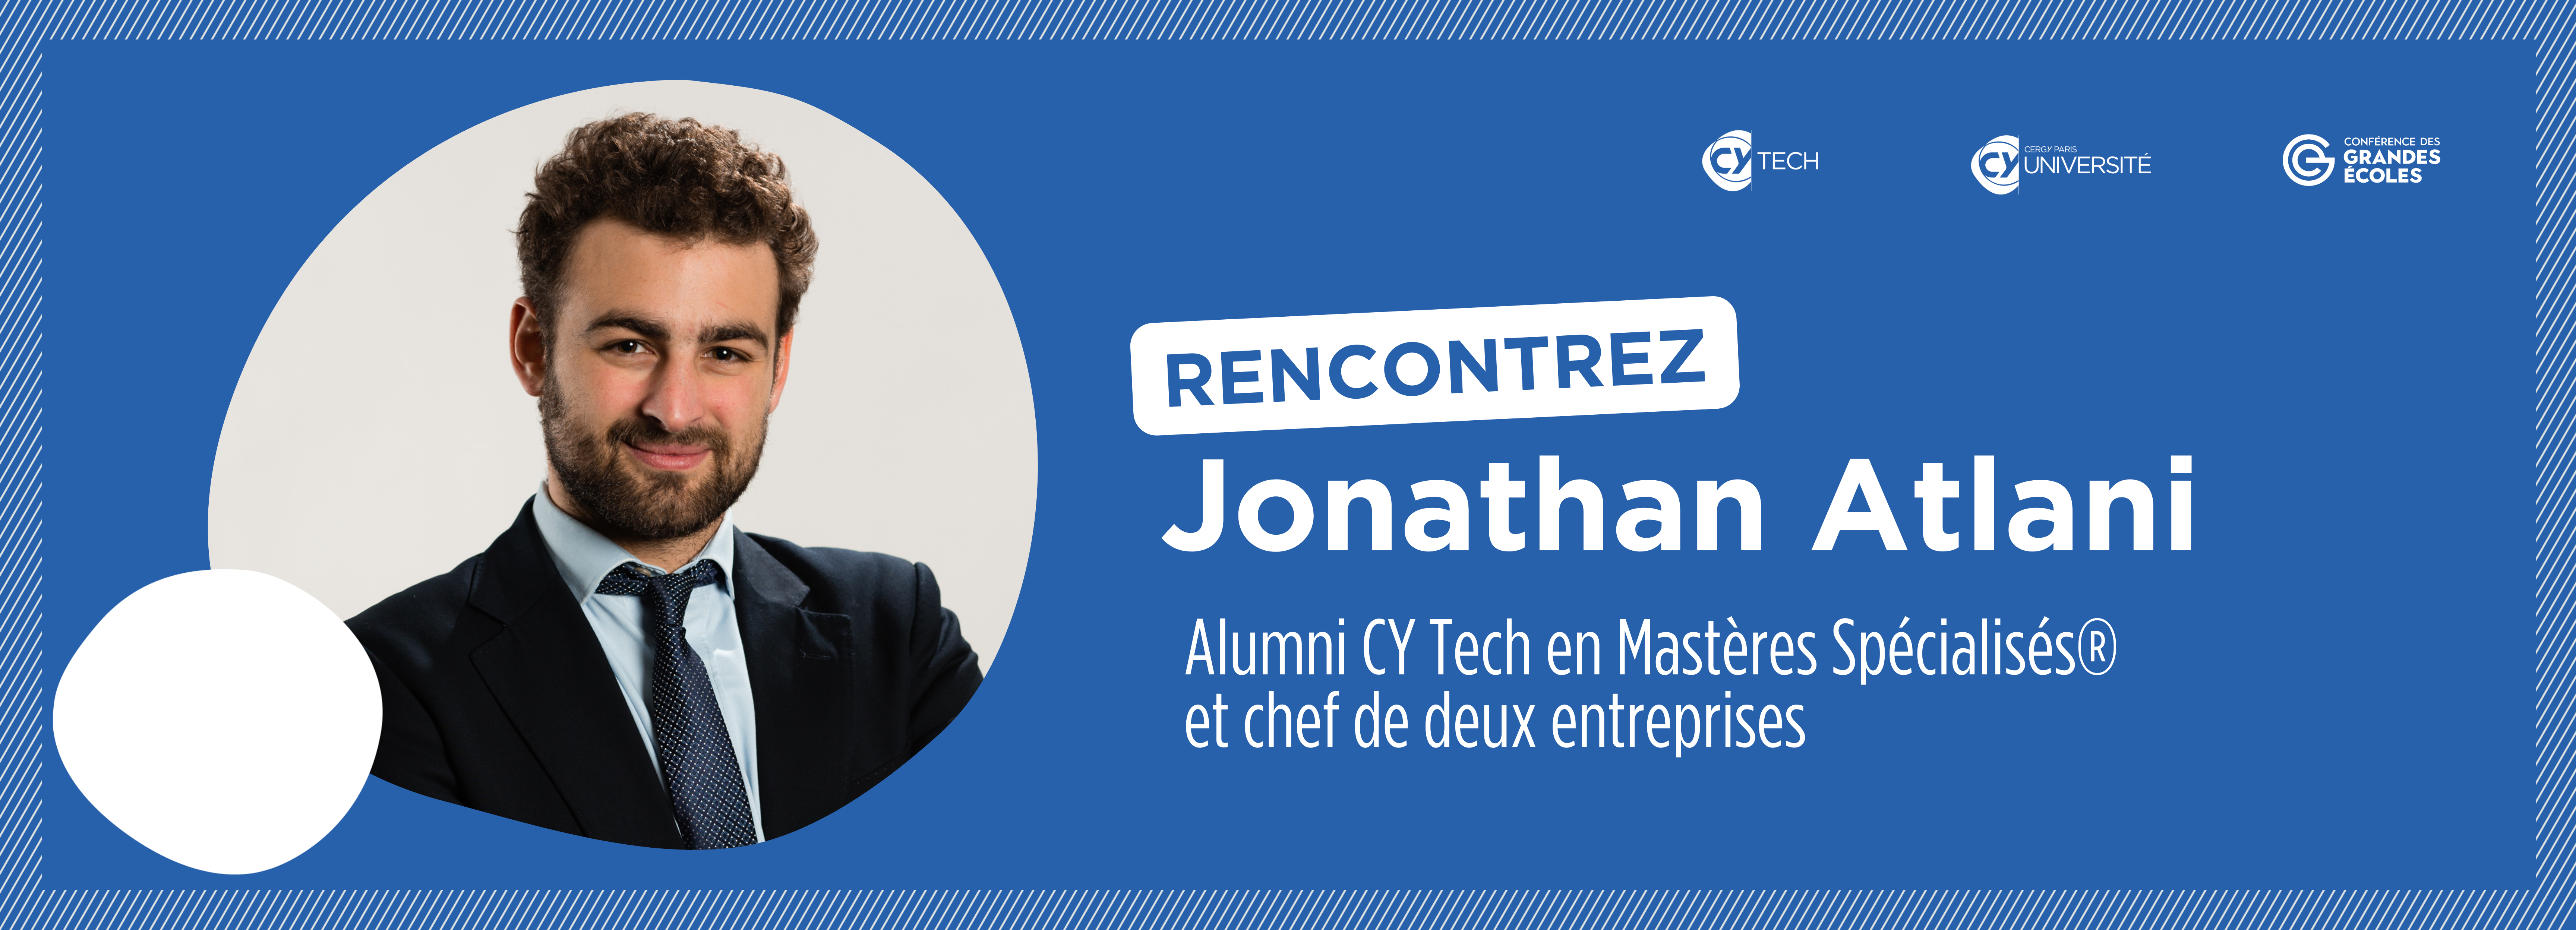 Jonathan Atlani Alumni CY Tech